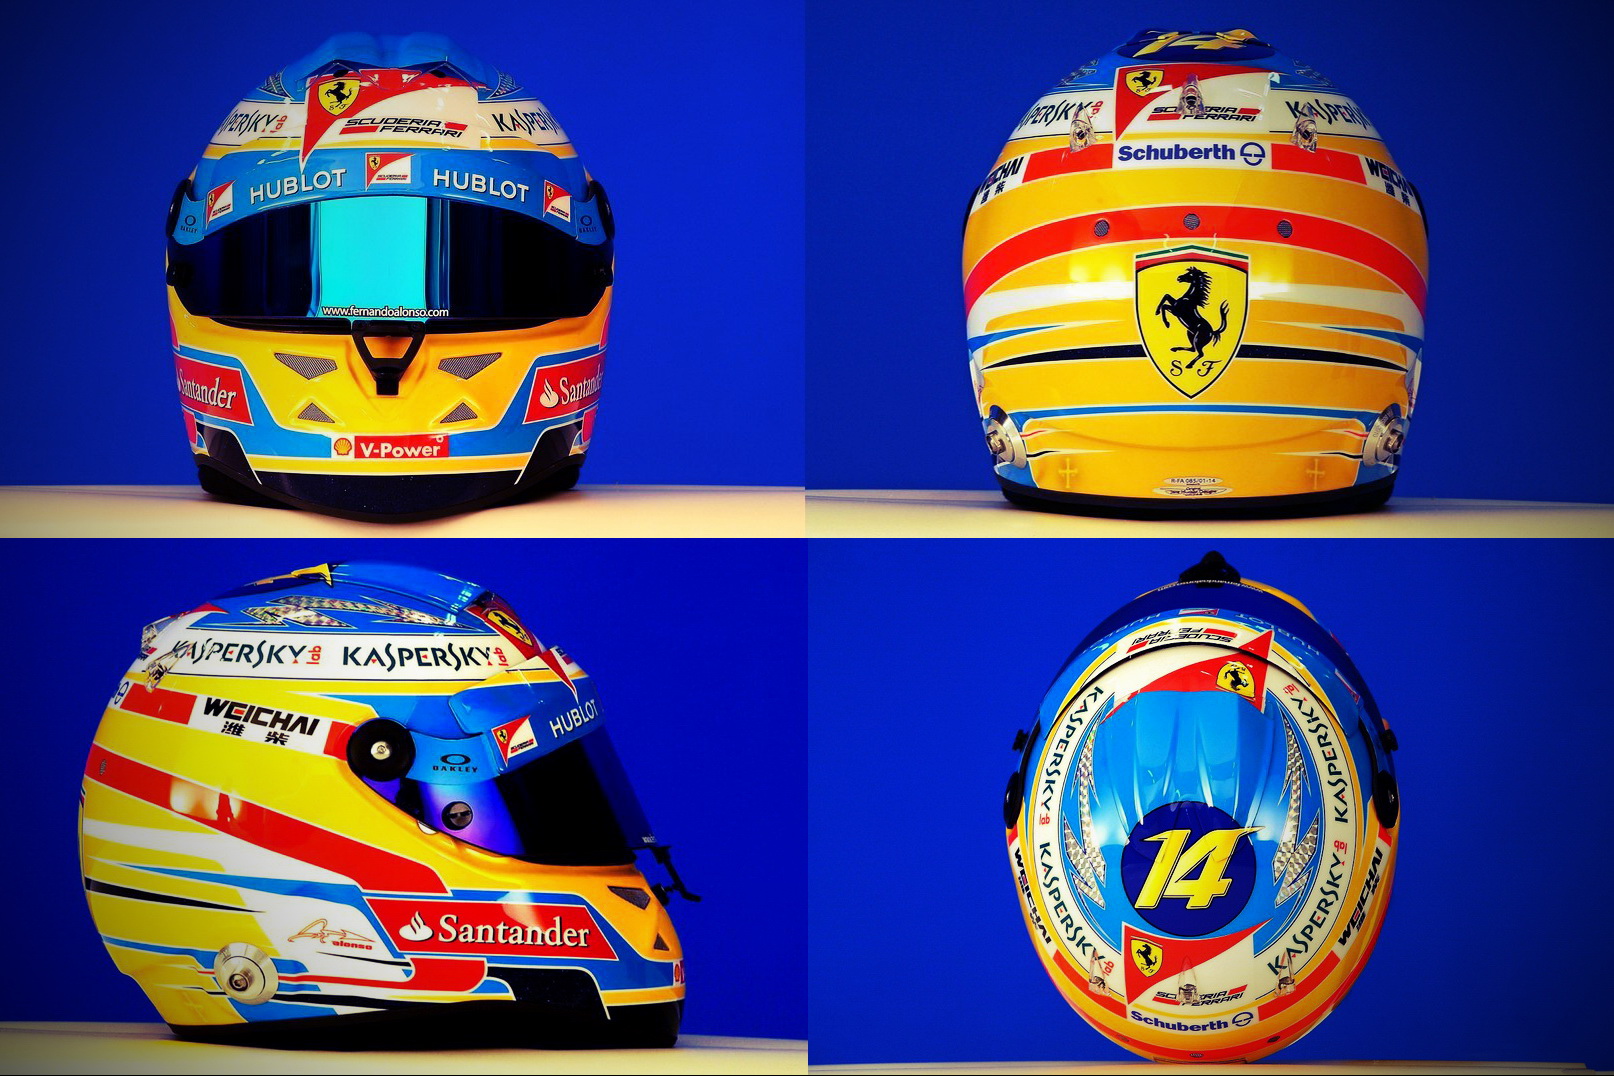 Шлем Фернандо Алонсо на сезон 2014 года | 2014 helmet of Fernando Alonso